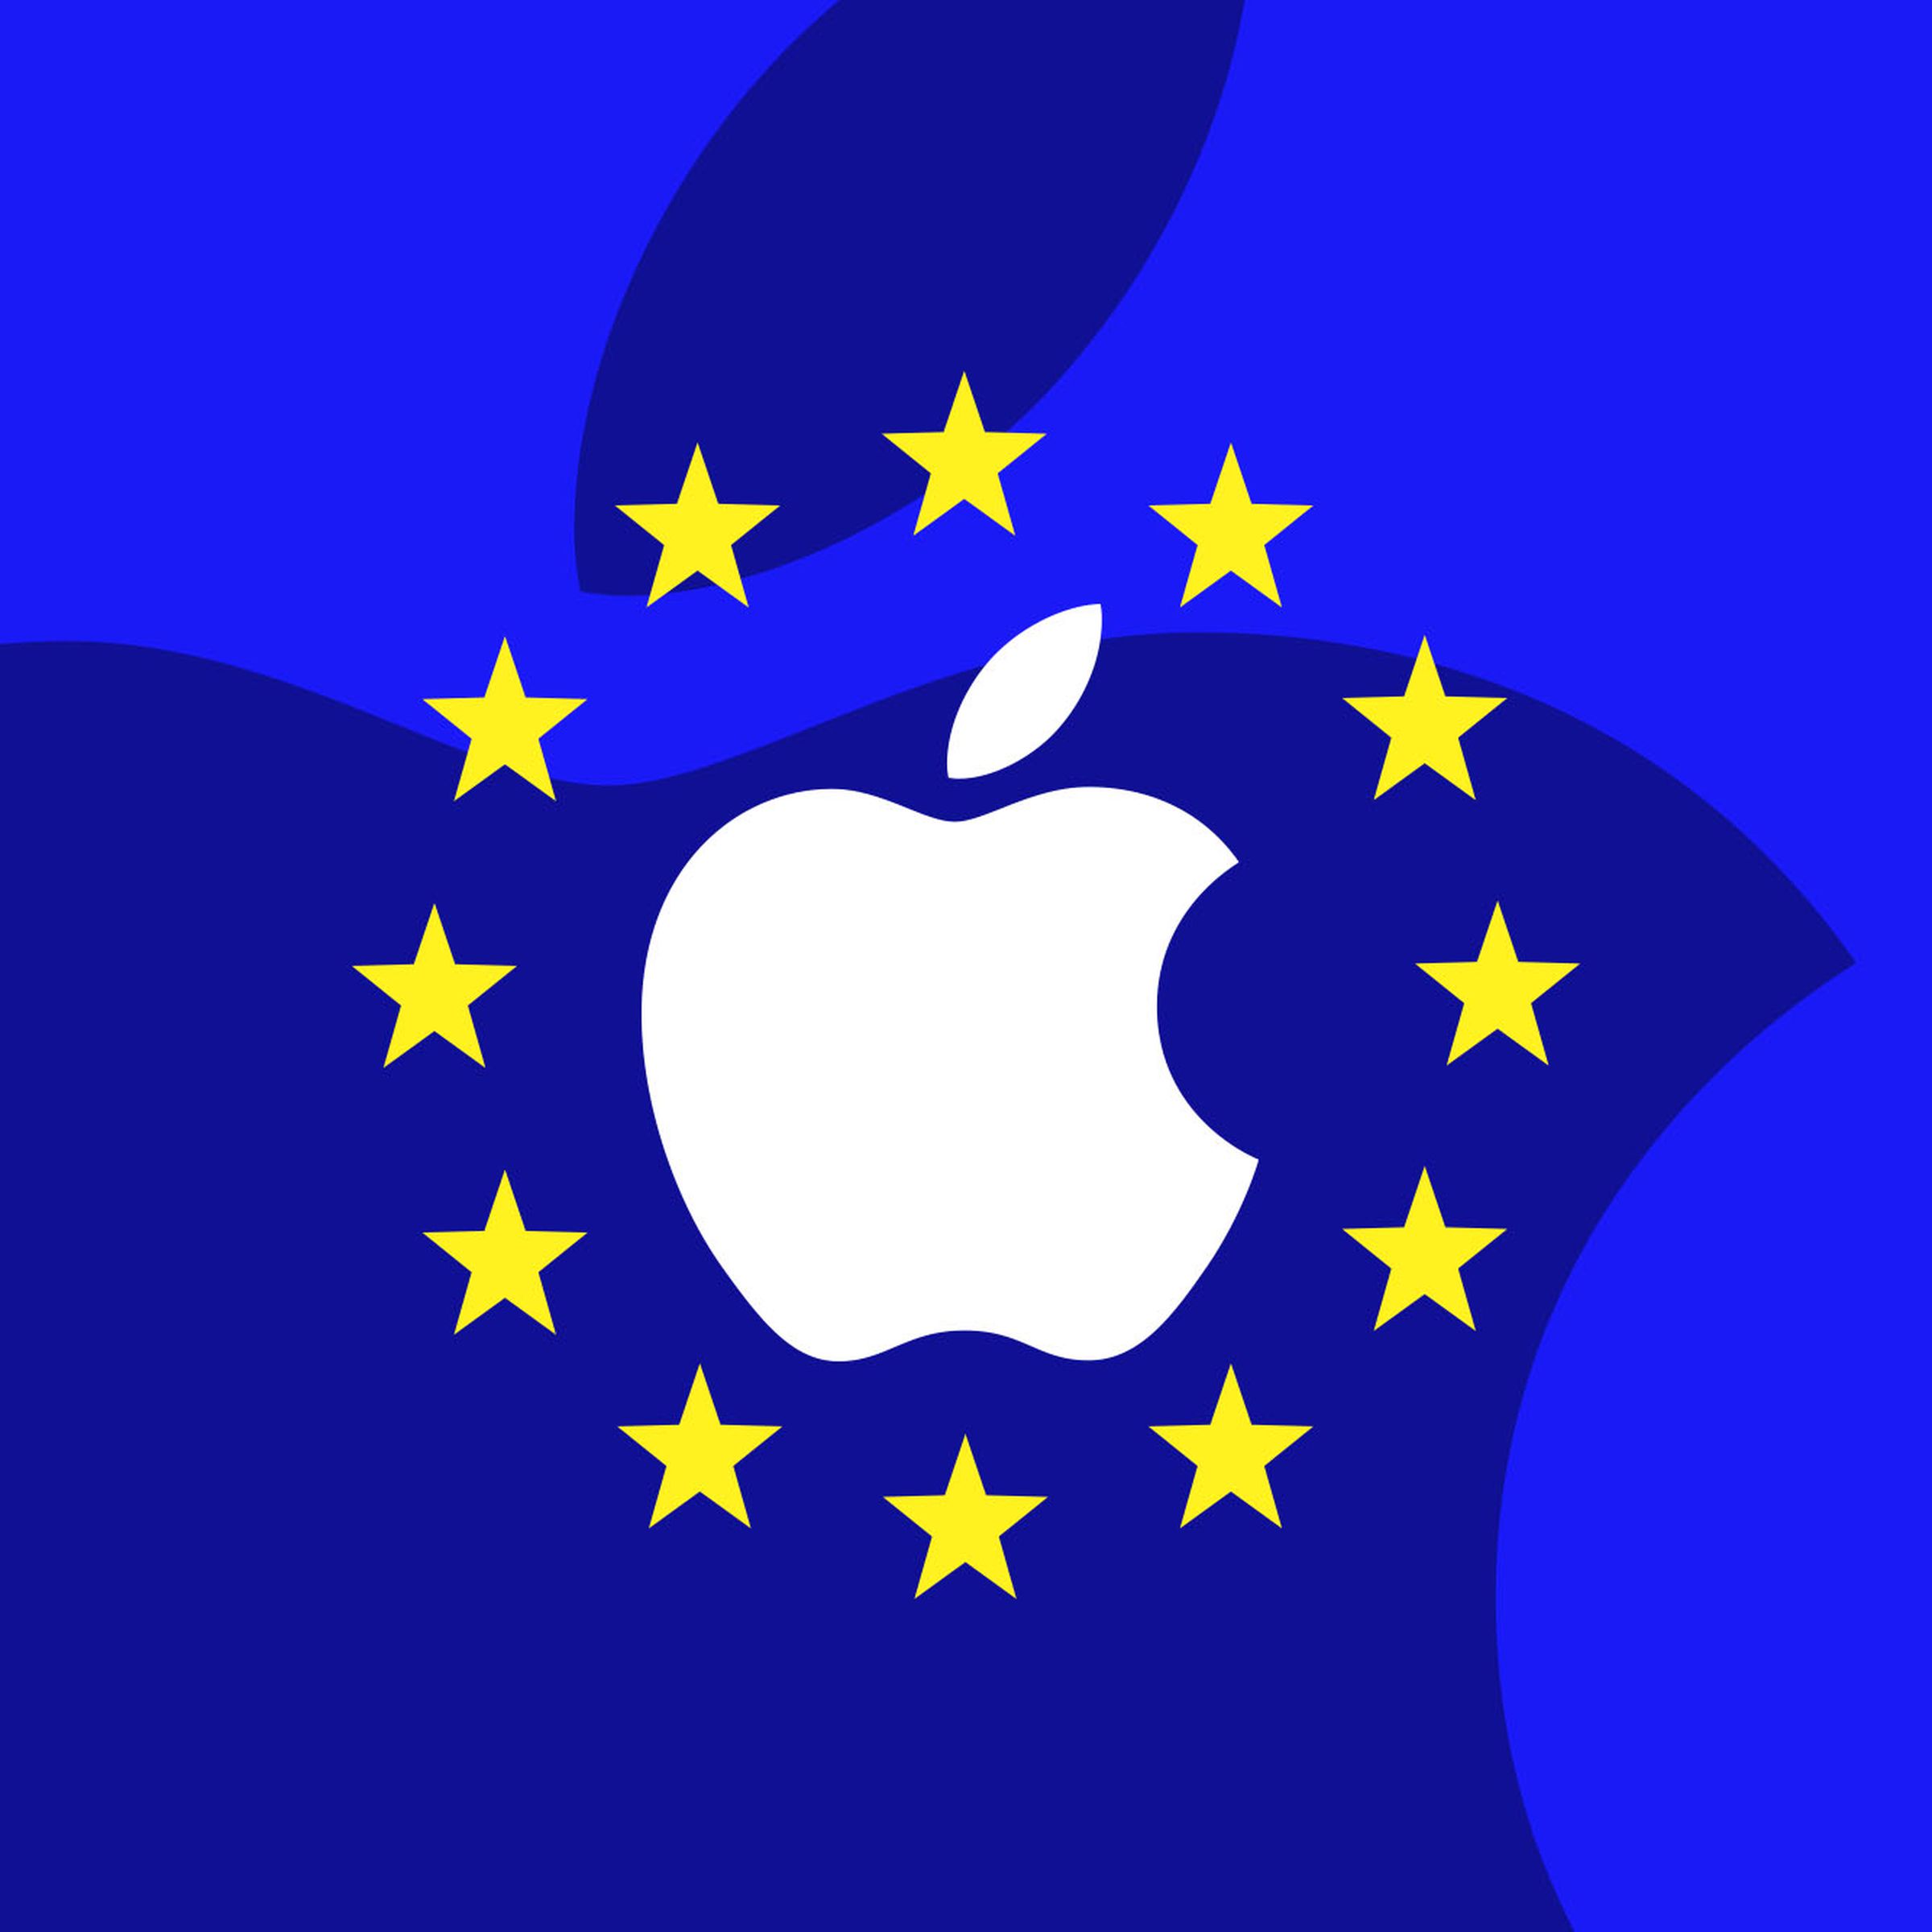 Vector illustration of the Apple logo in the EU stars.